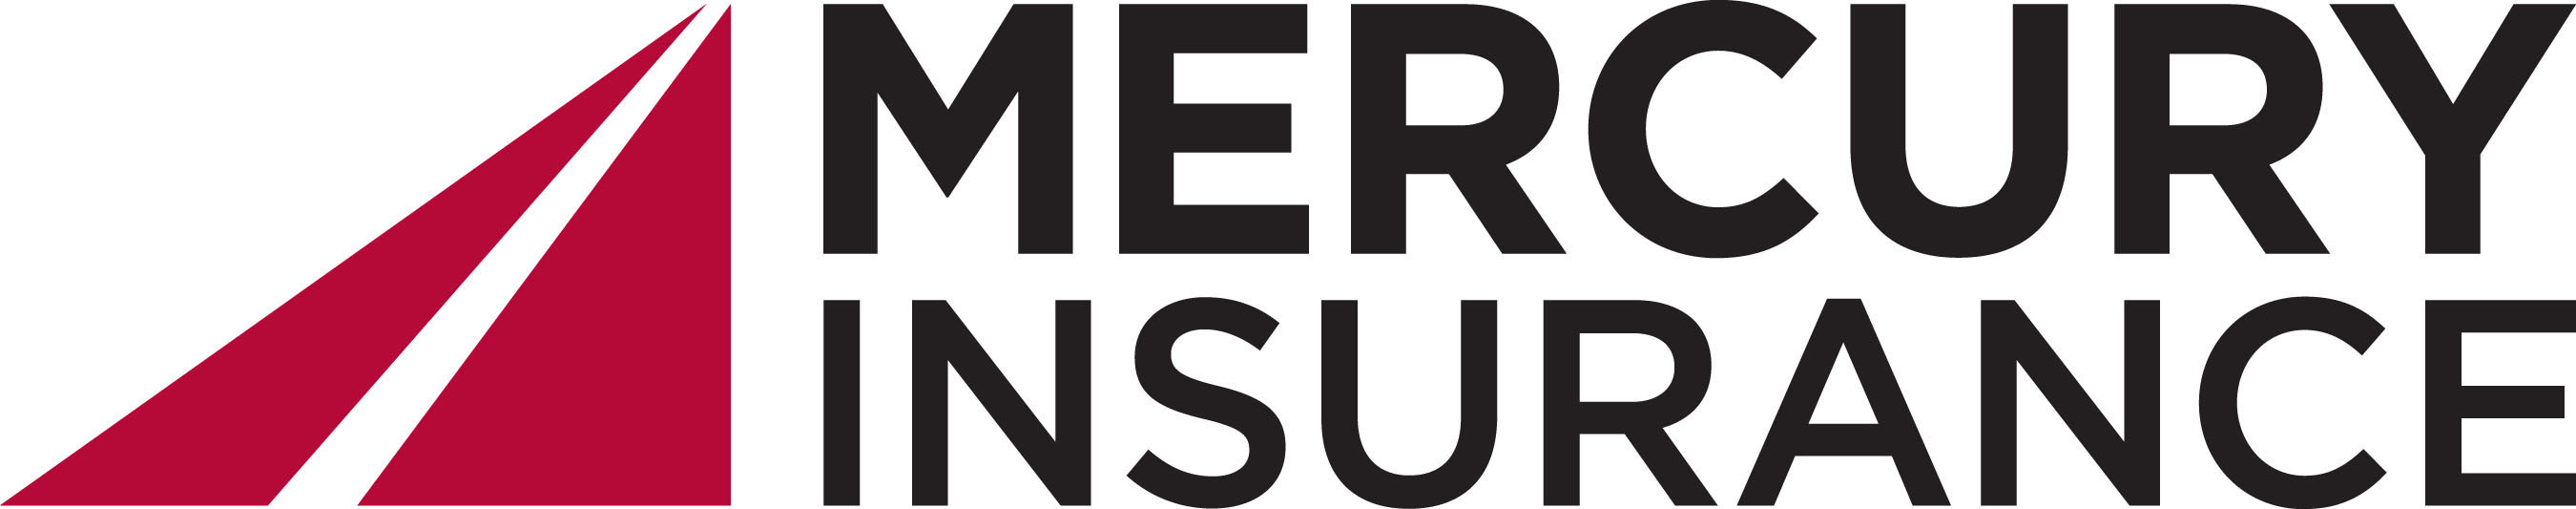 Mercury Insurance Logo. (PRNewsFoto/)